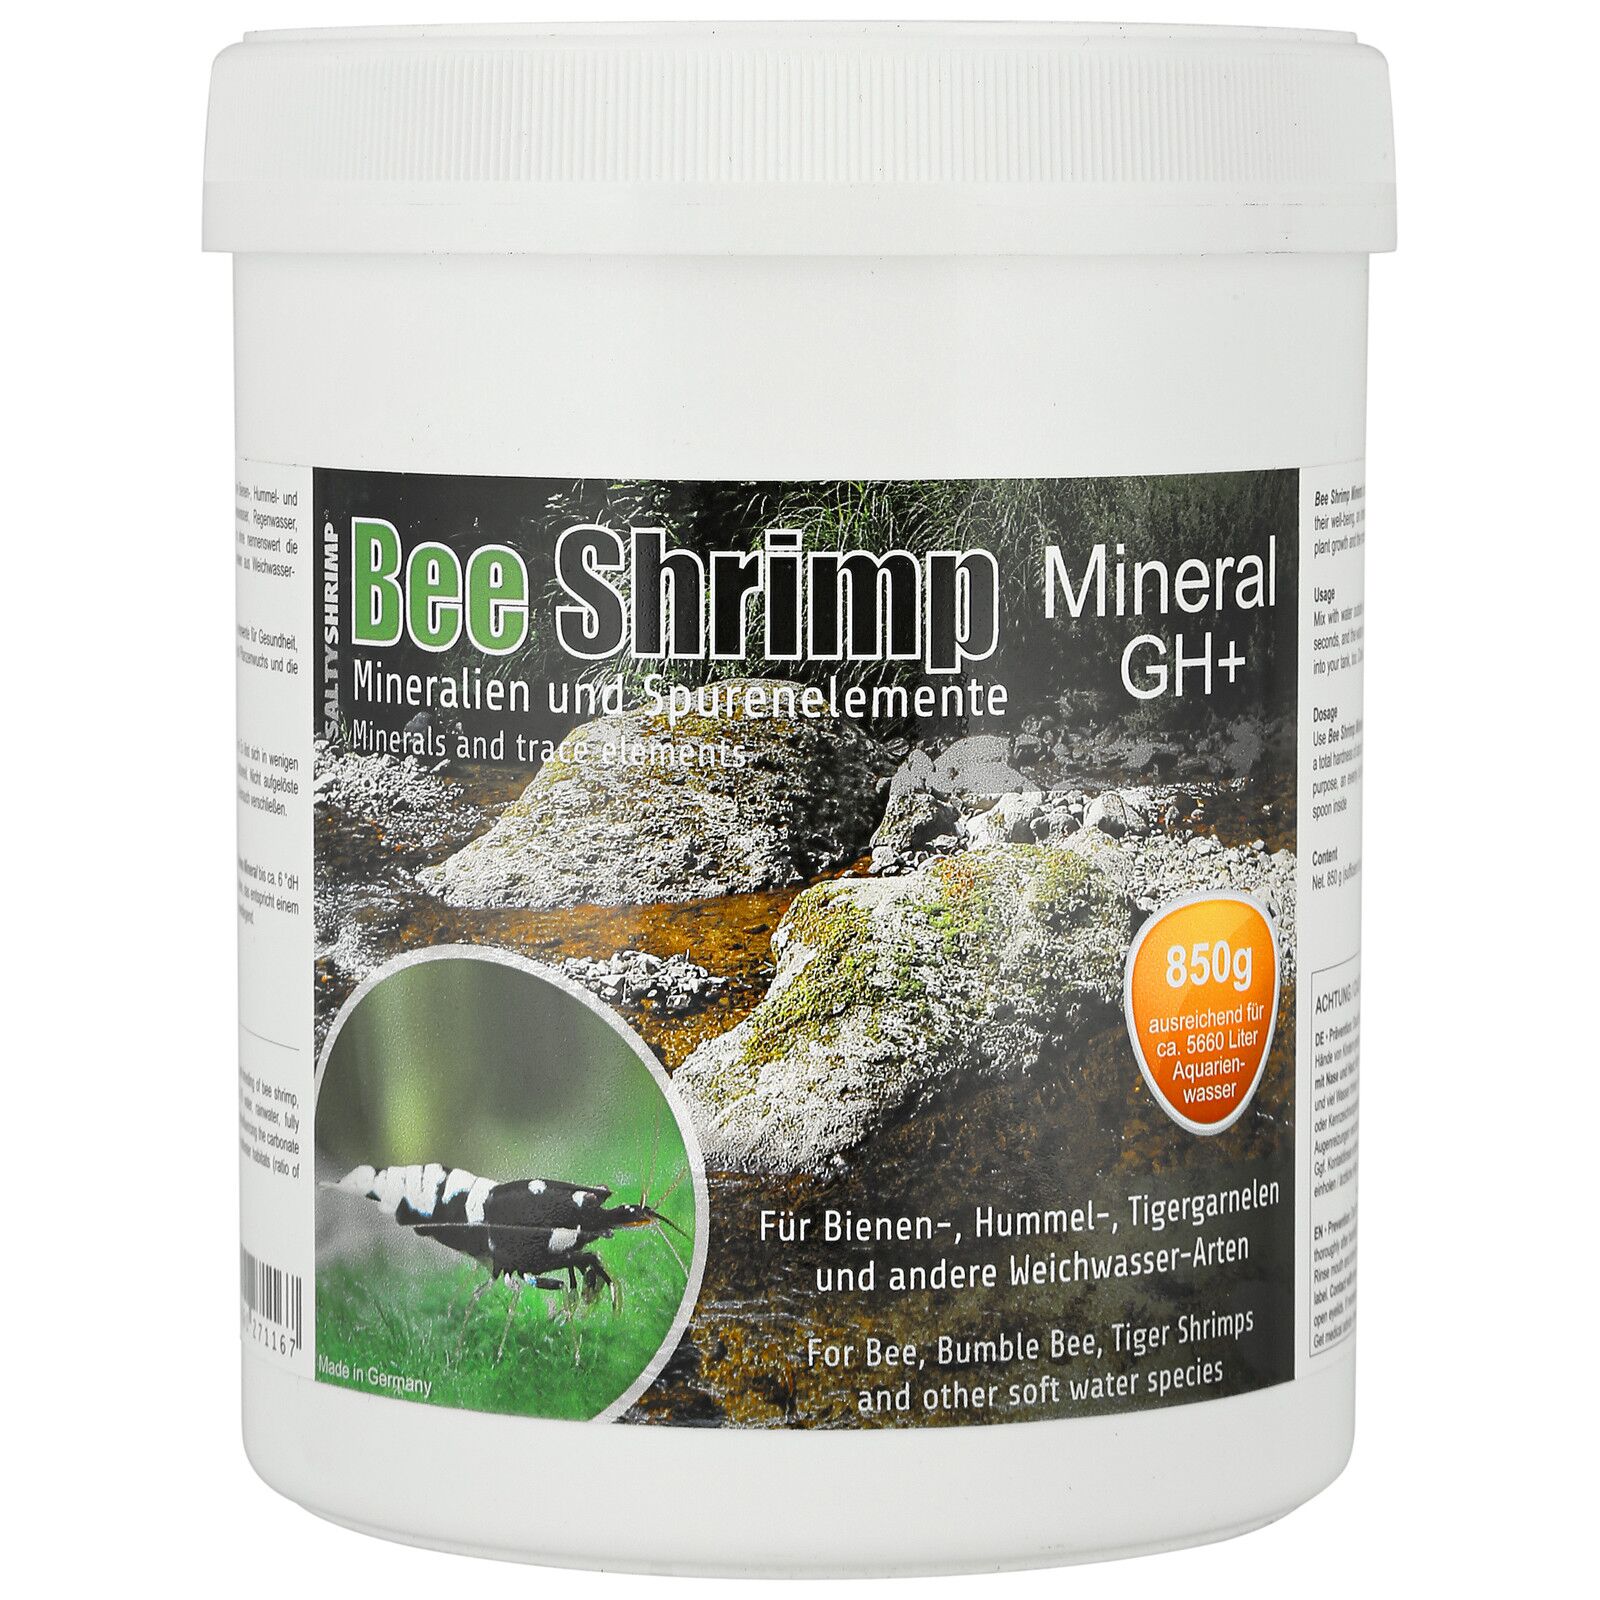 SaltyShrimp - Bee Shrimp Mineral GH+